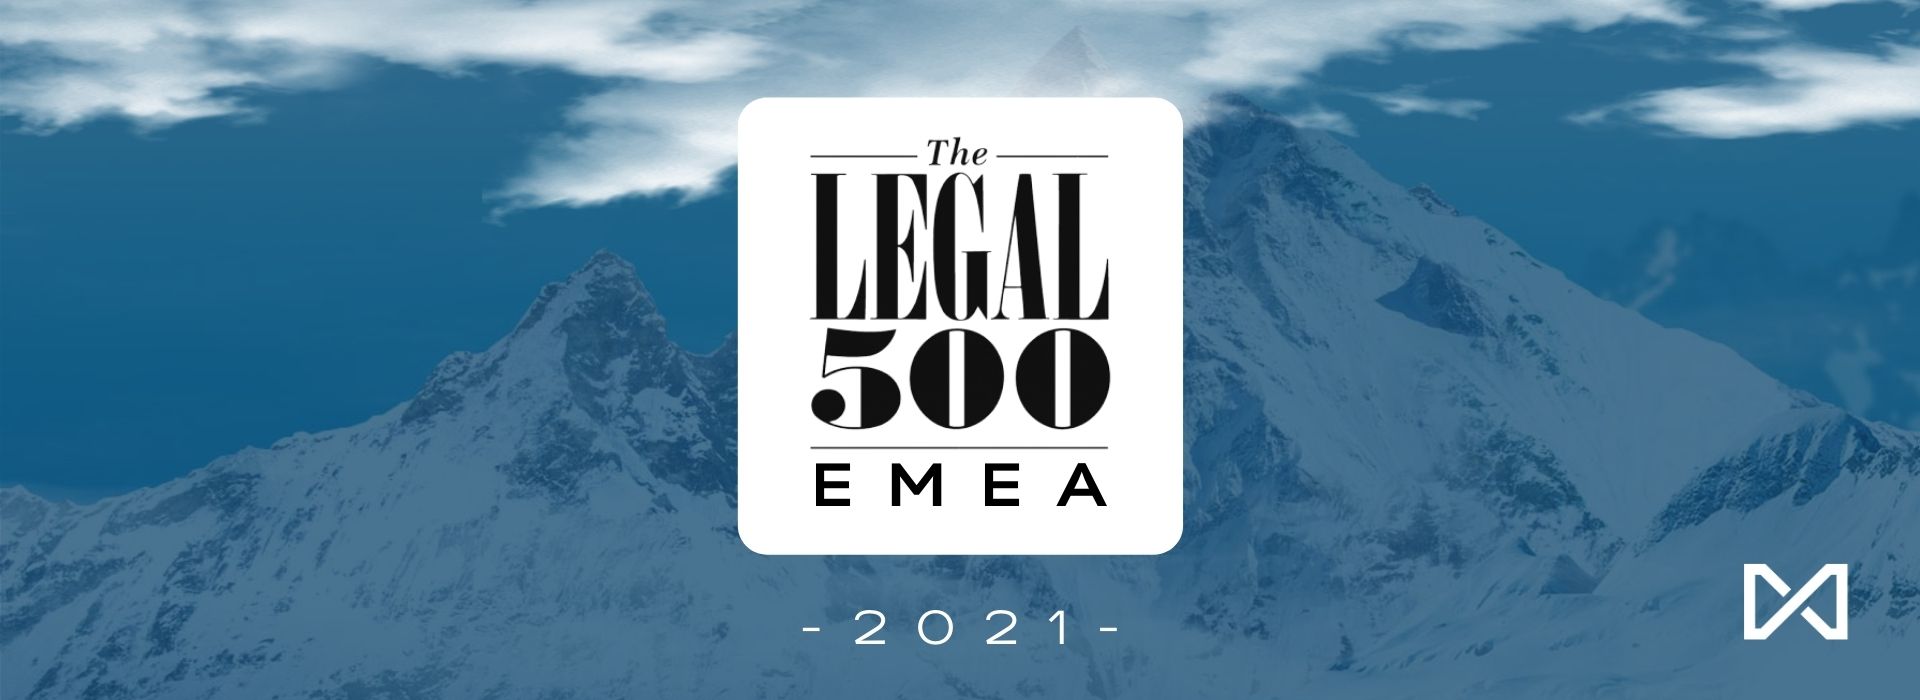 EVERLEGAL in the Legal 500 EMEA 2021 Ranking